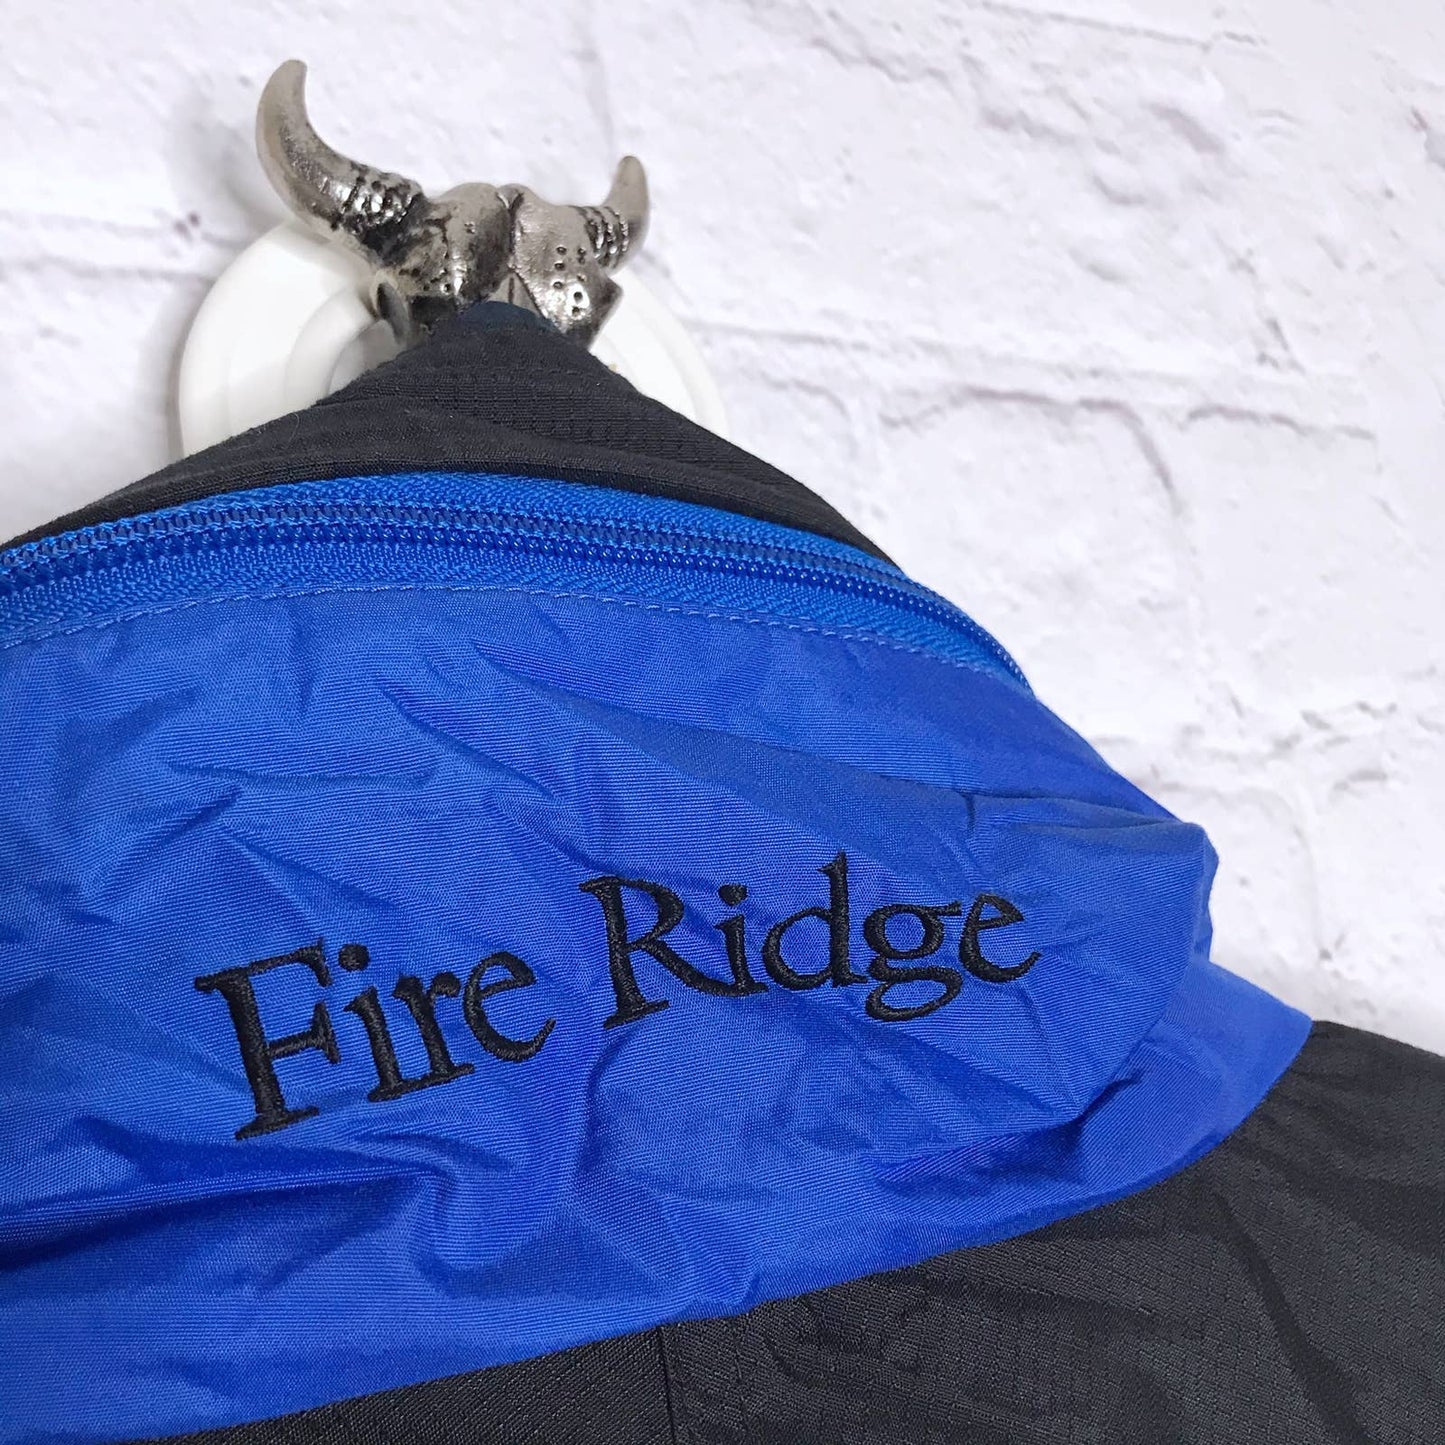 Columbia Fire Ridge Jacket Blue Black with Hood Winter Coat Size L